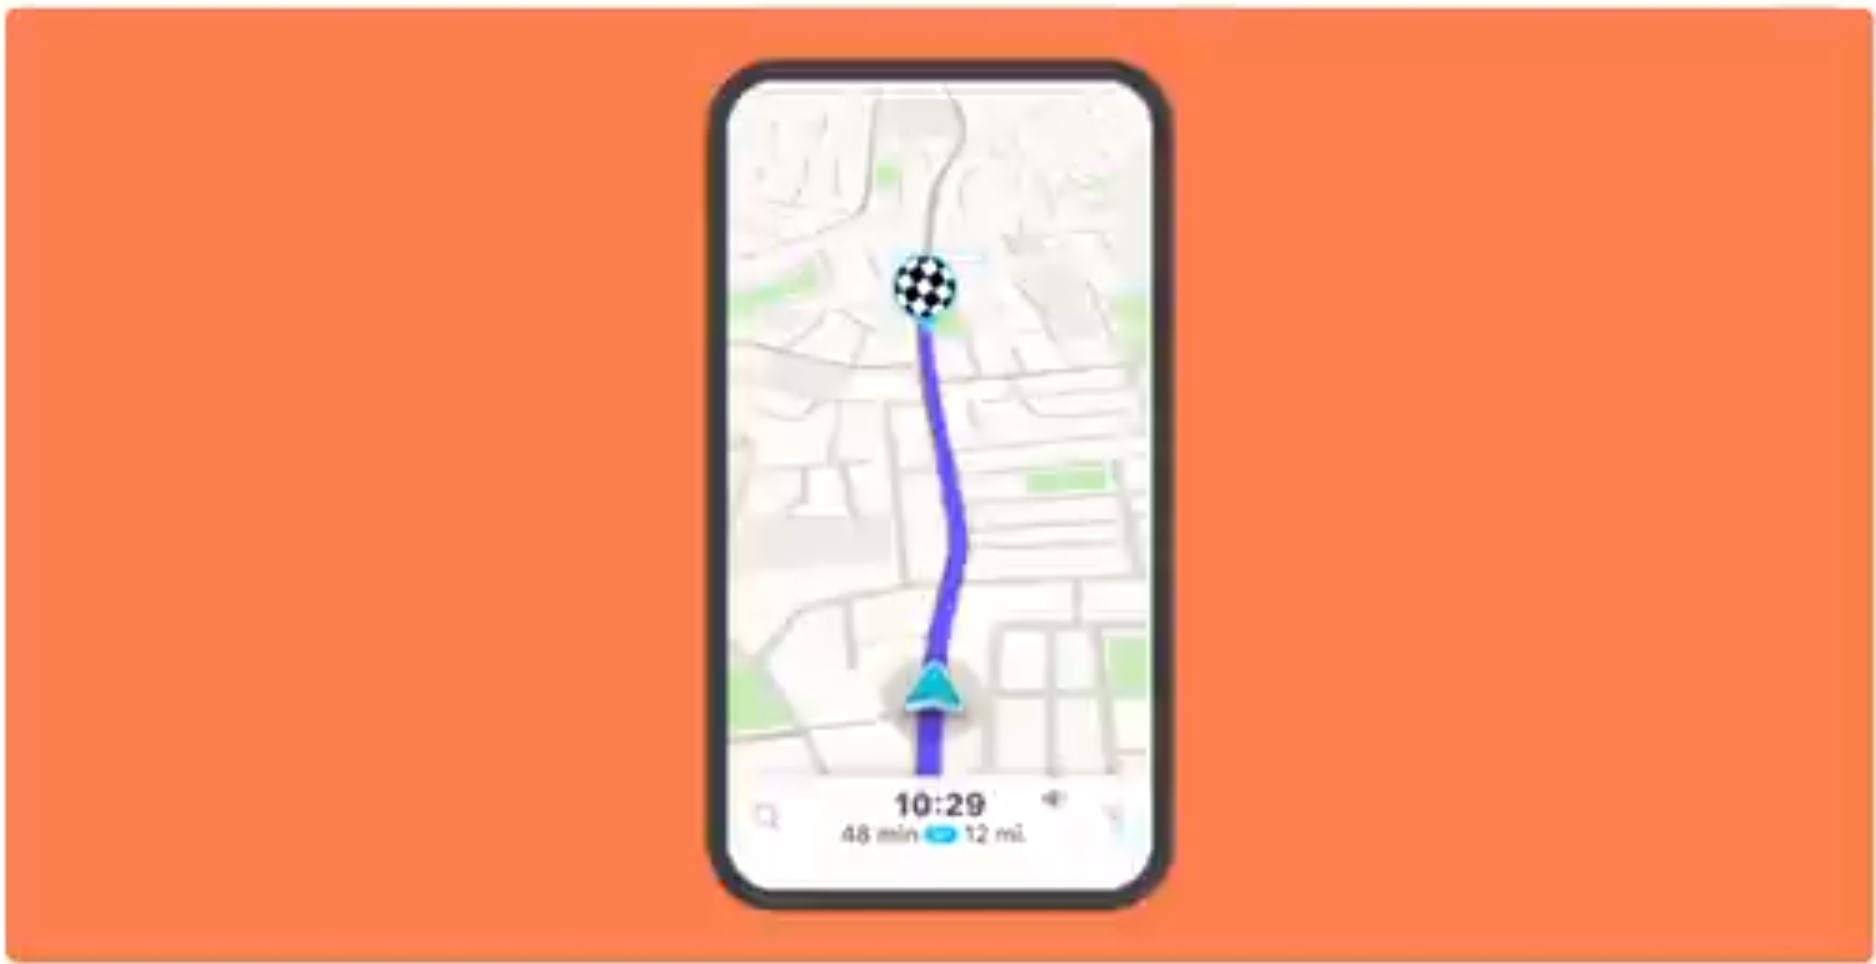 phone image with Waze map